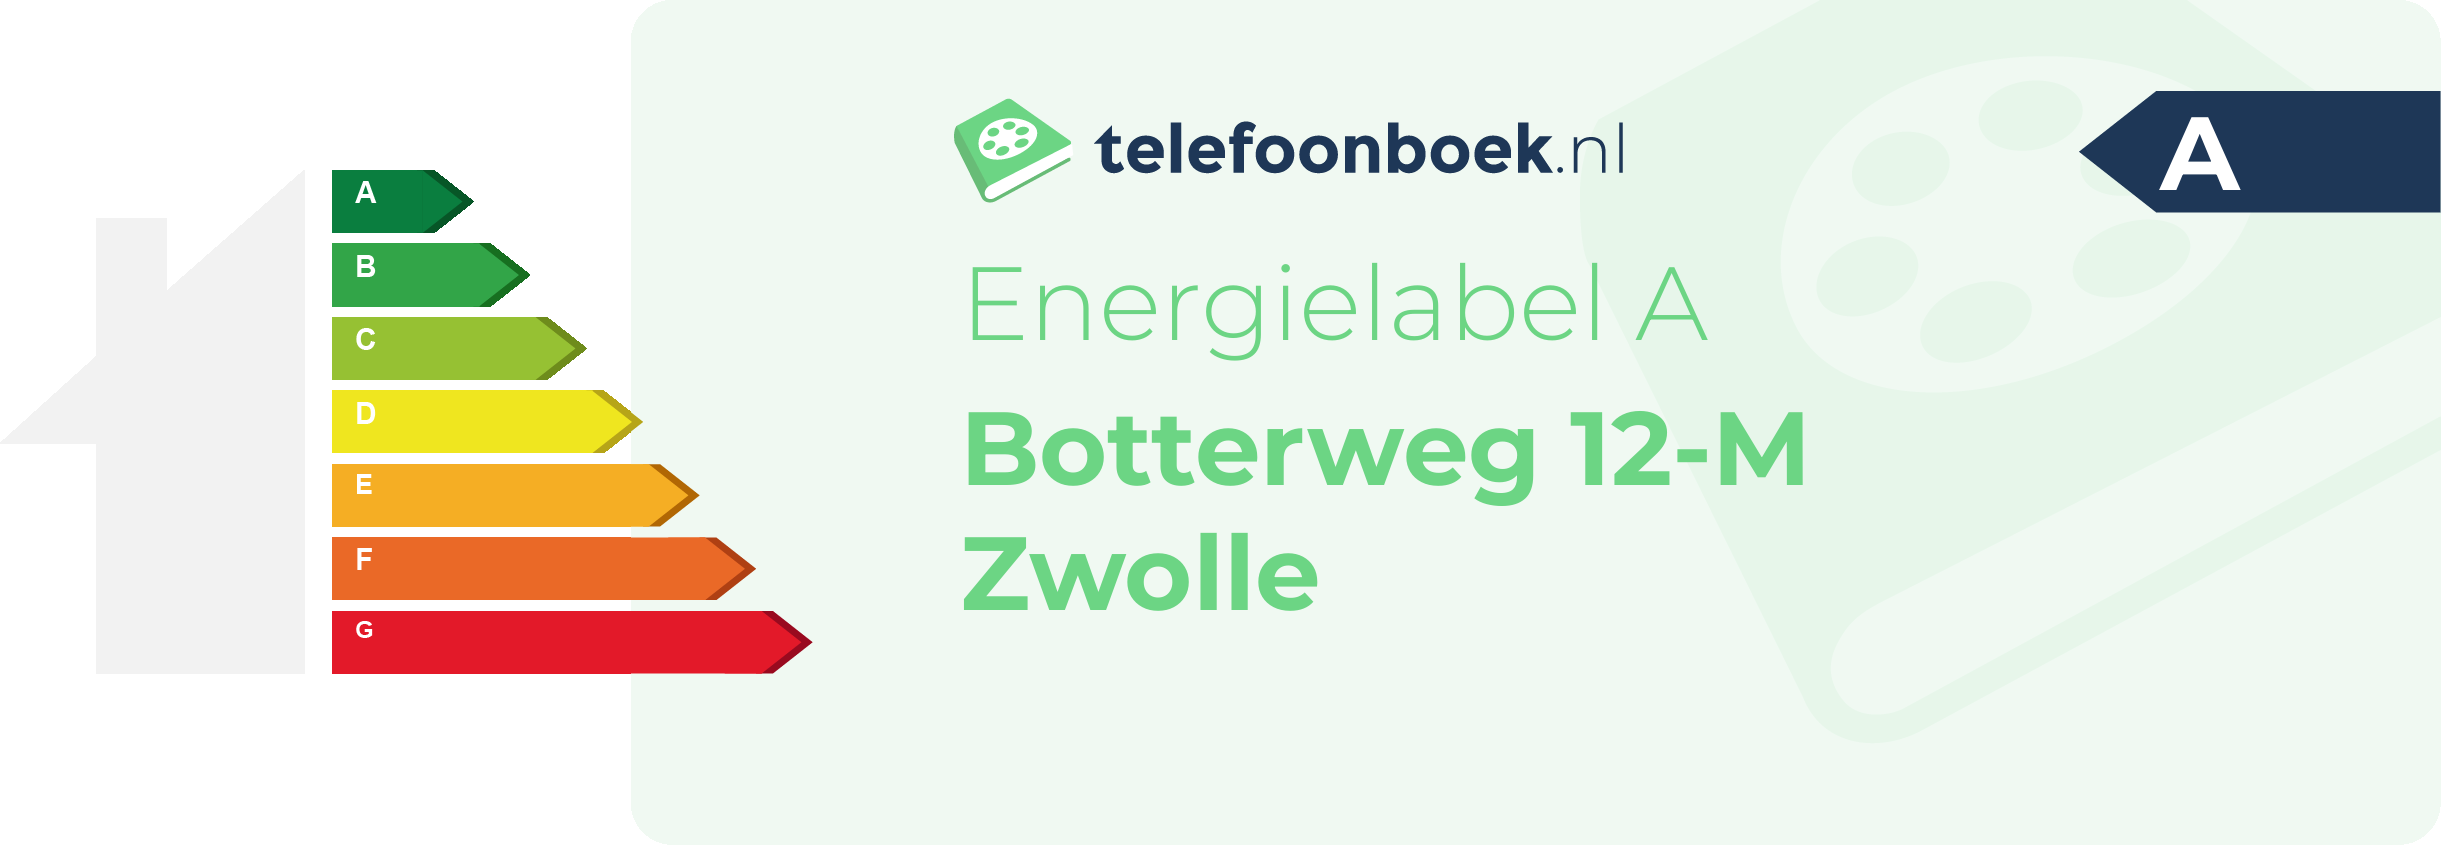 Energielabel Botterweg 12-M Zwolle